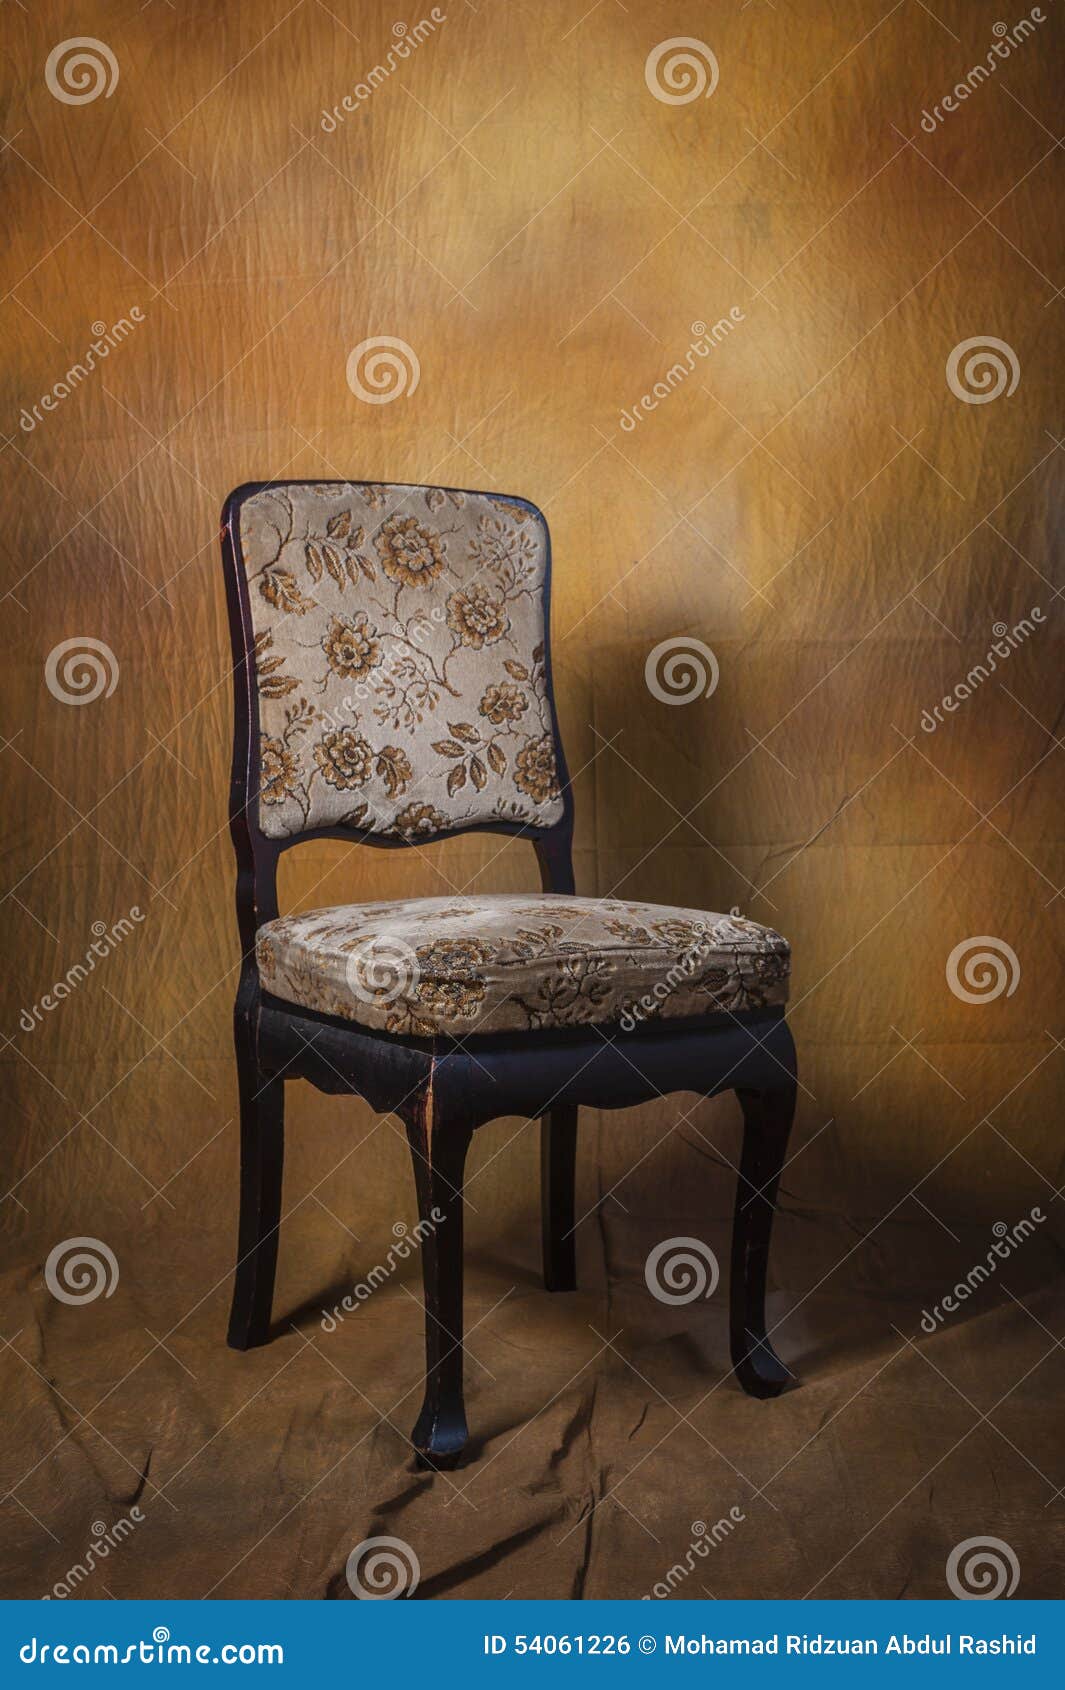 Chair at studio stock photo. Image of portable, retro - 54061226